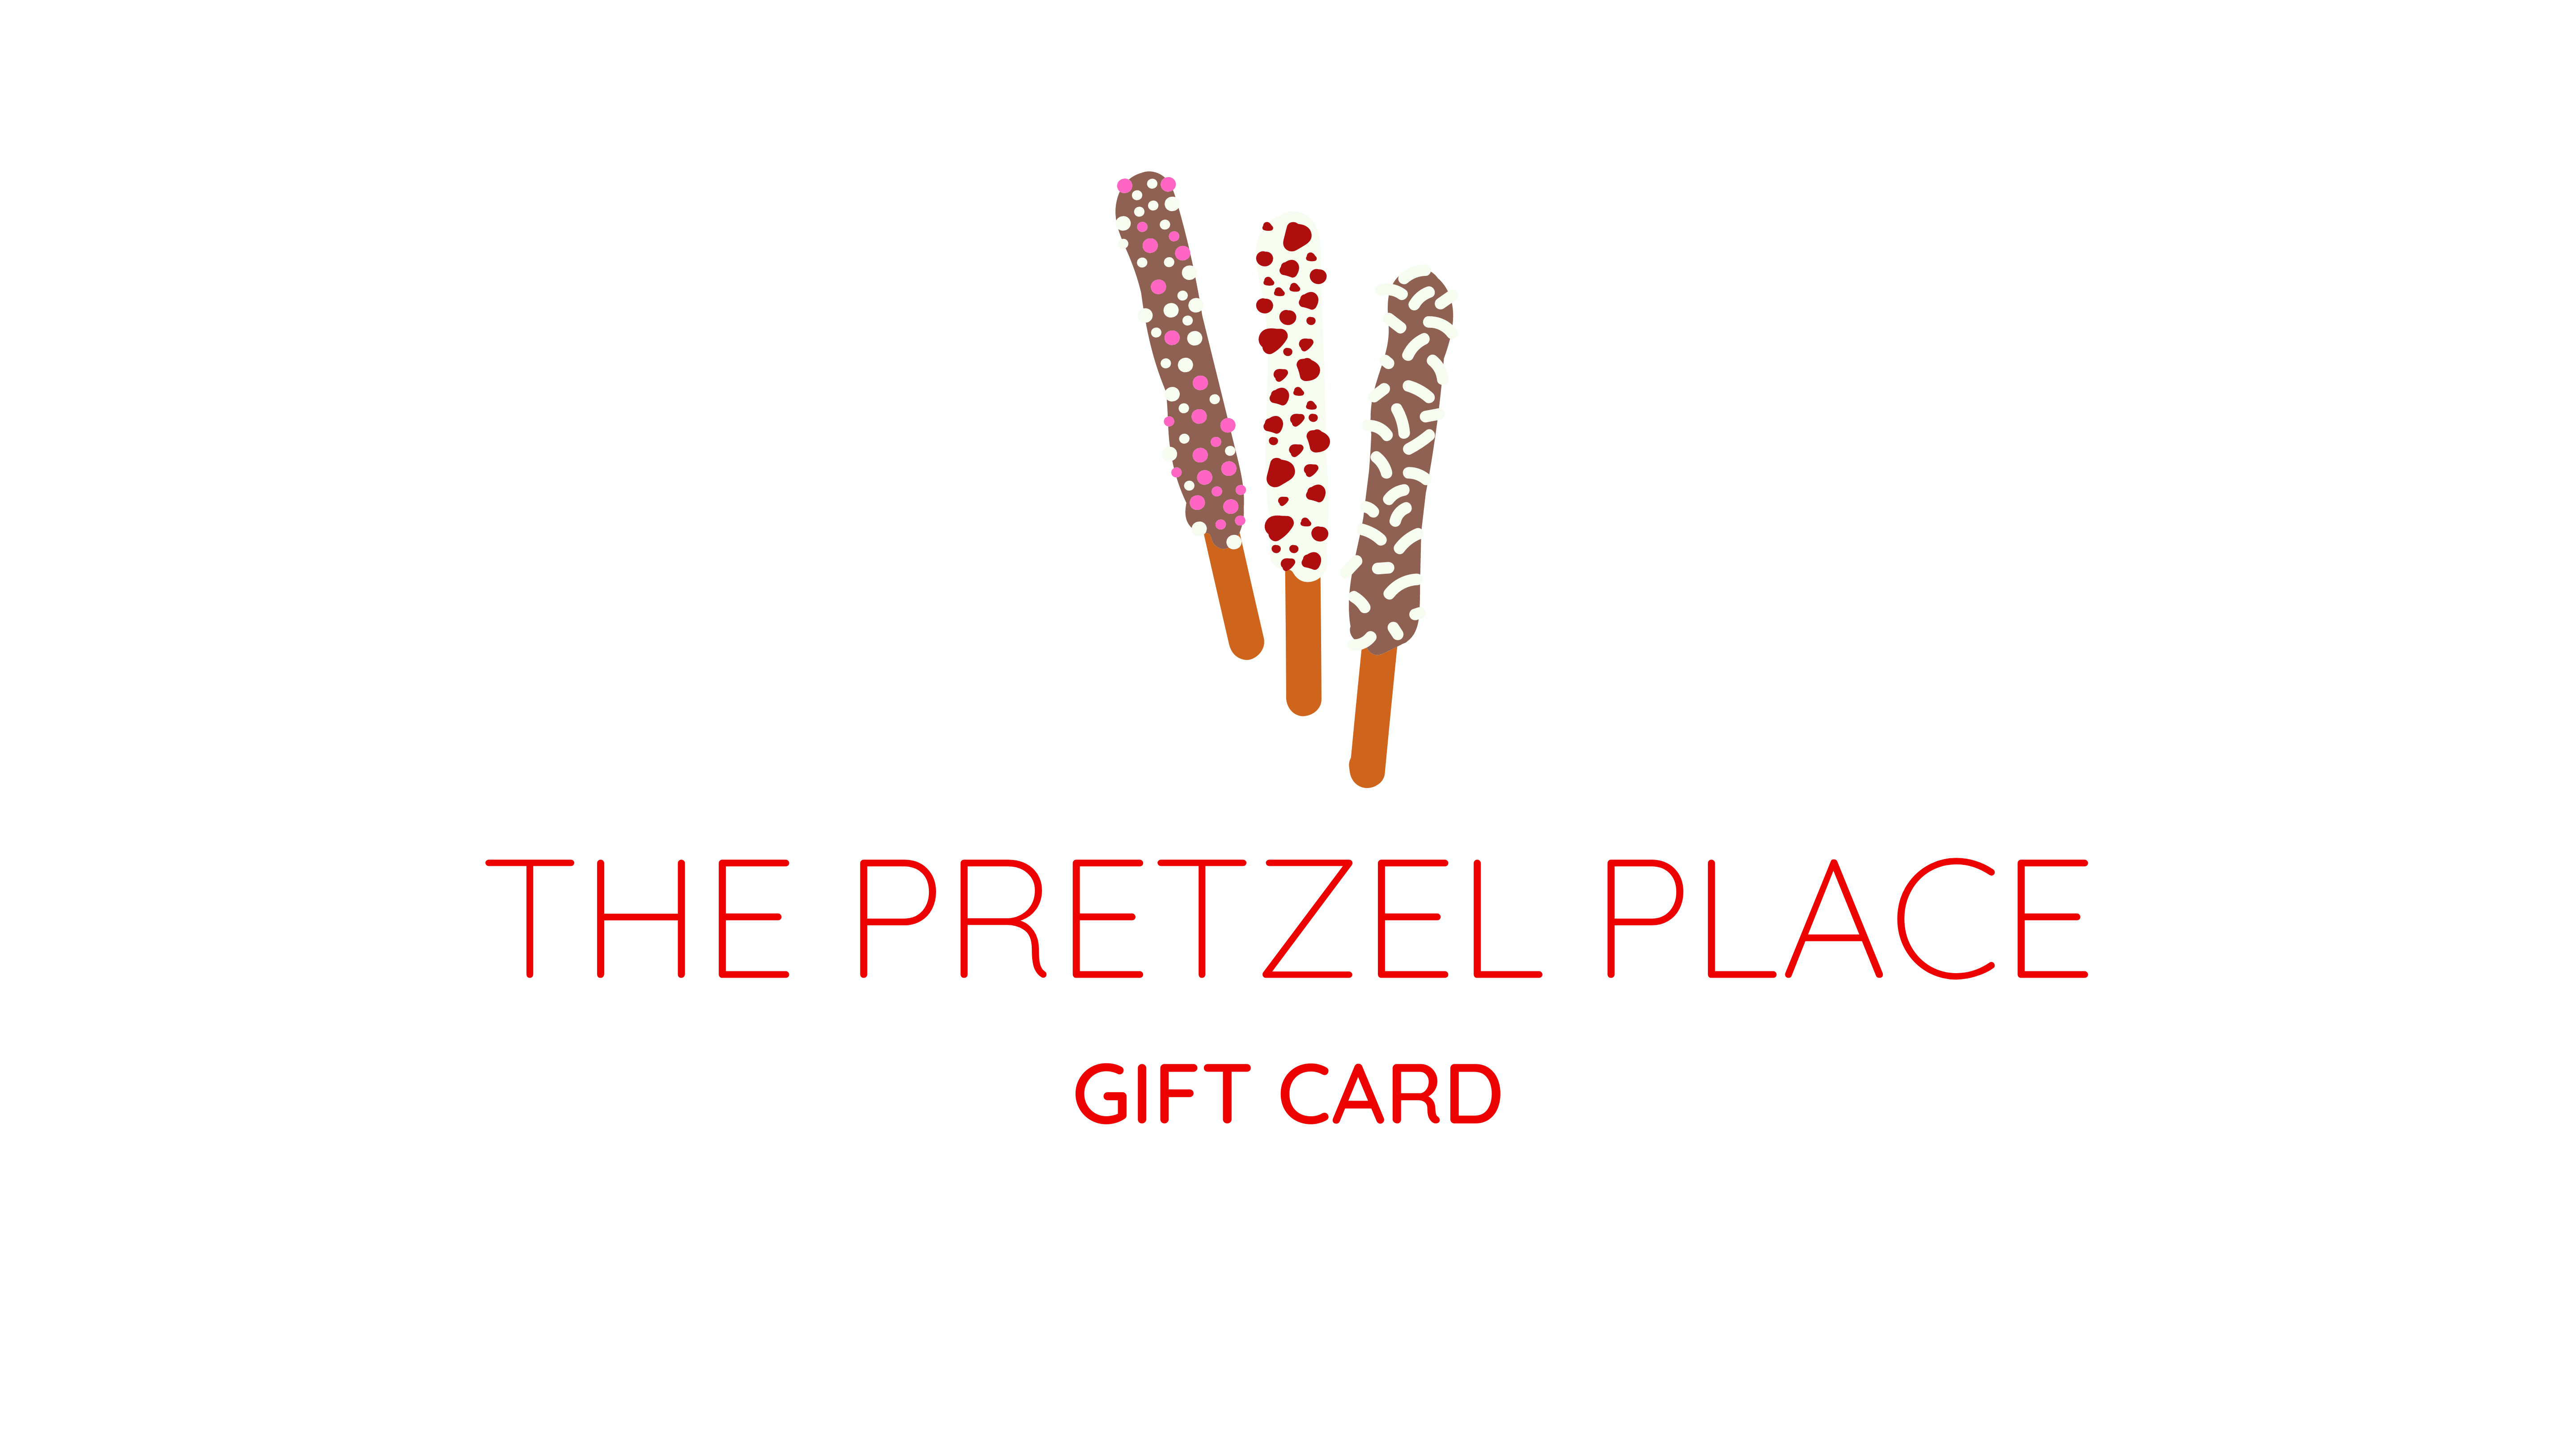 The Pretzel Place Gift Card